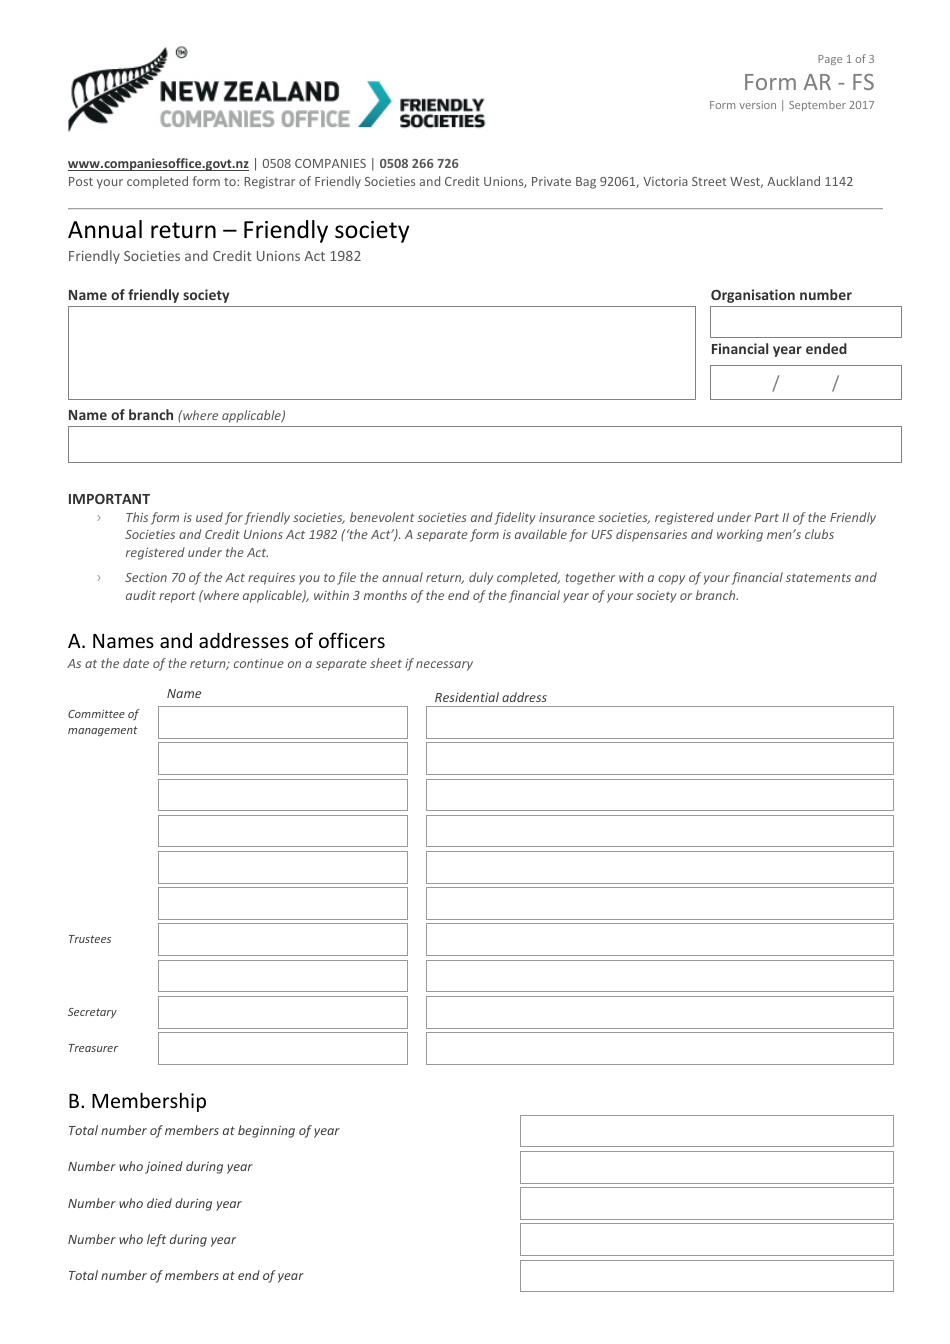 Form AR-FS Annual Return - Friendly Society - New Zealand, Page 1